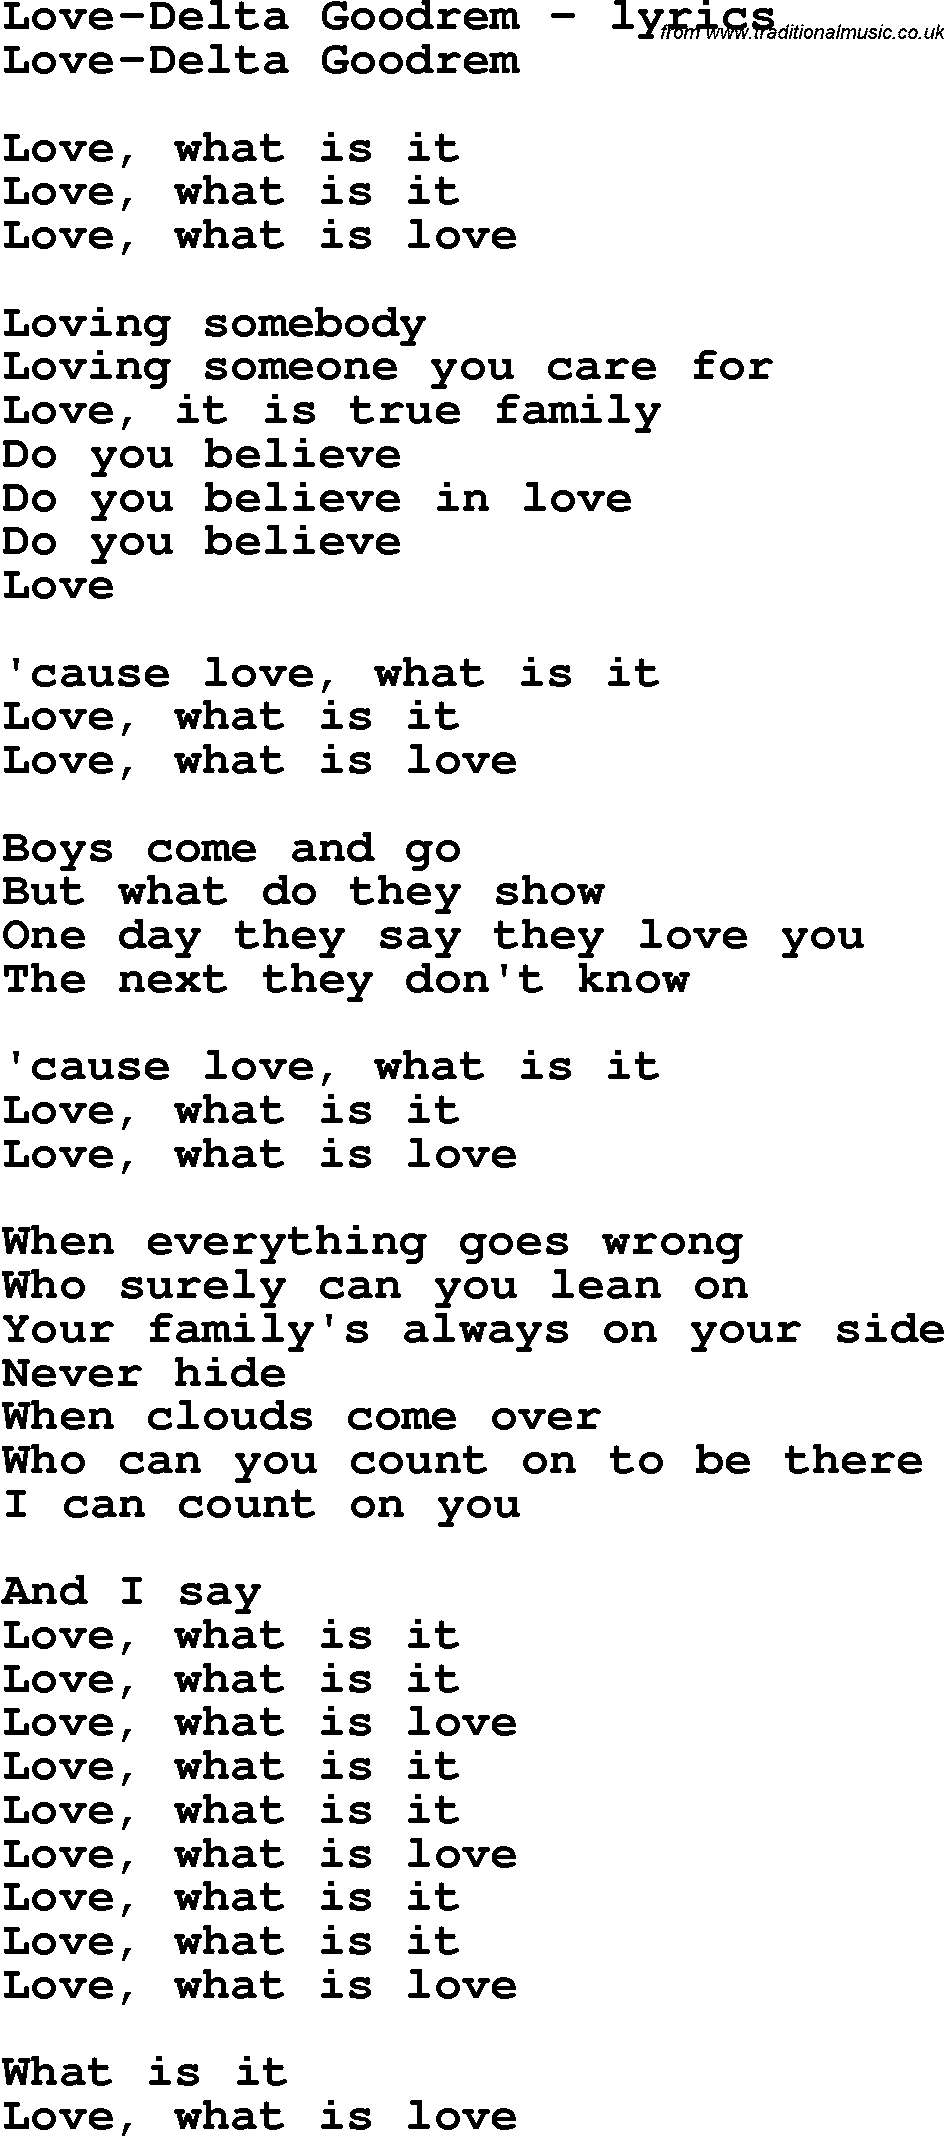 Love Song Lyrics for: Love-Delta Goodrem